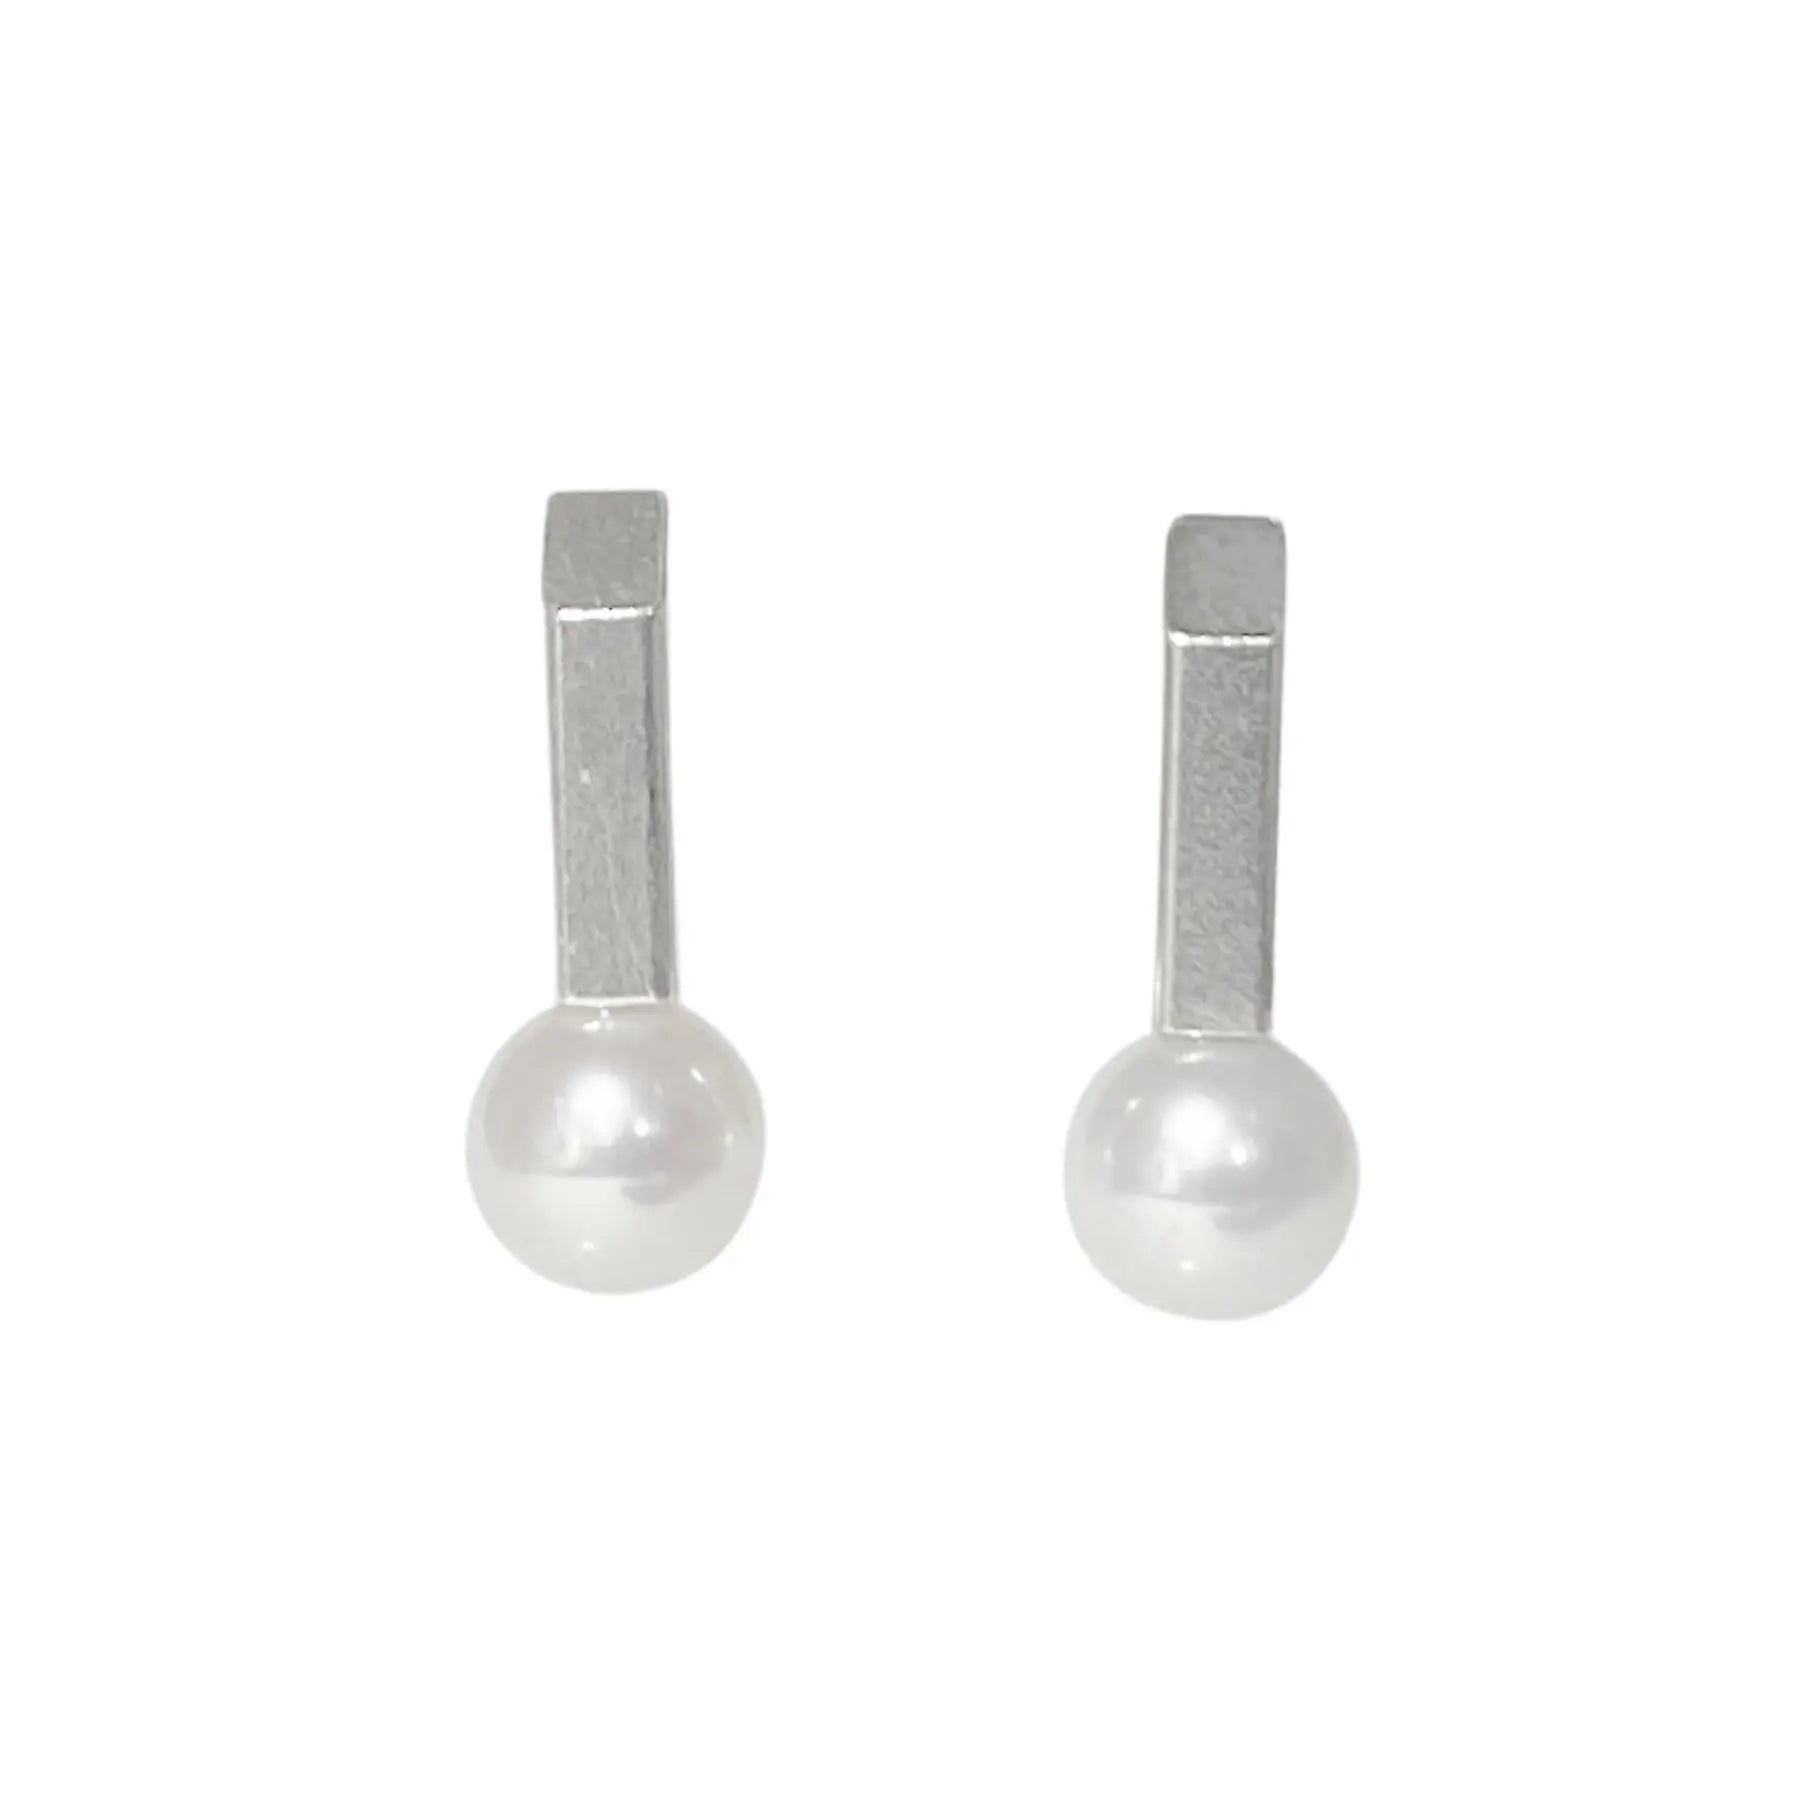 Rectangular Pearl Bar Earrings With Narrow Bar Bar Collection Pearls